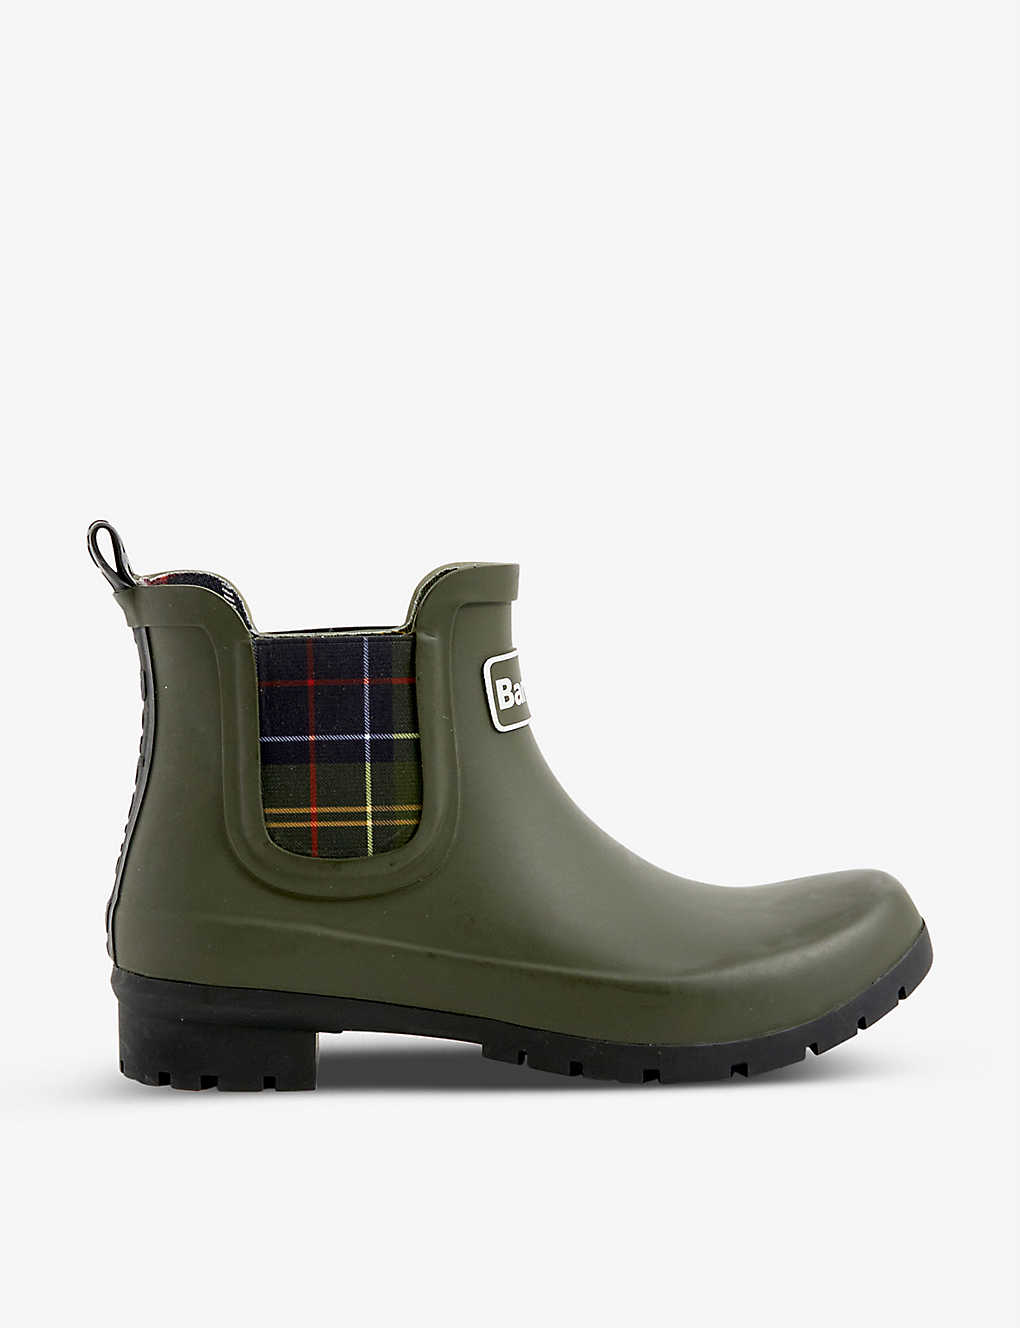 selfridges.com | Kingham branded rubber wellington boots